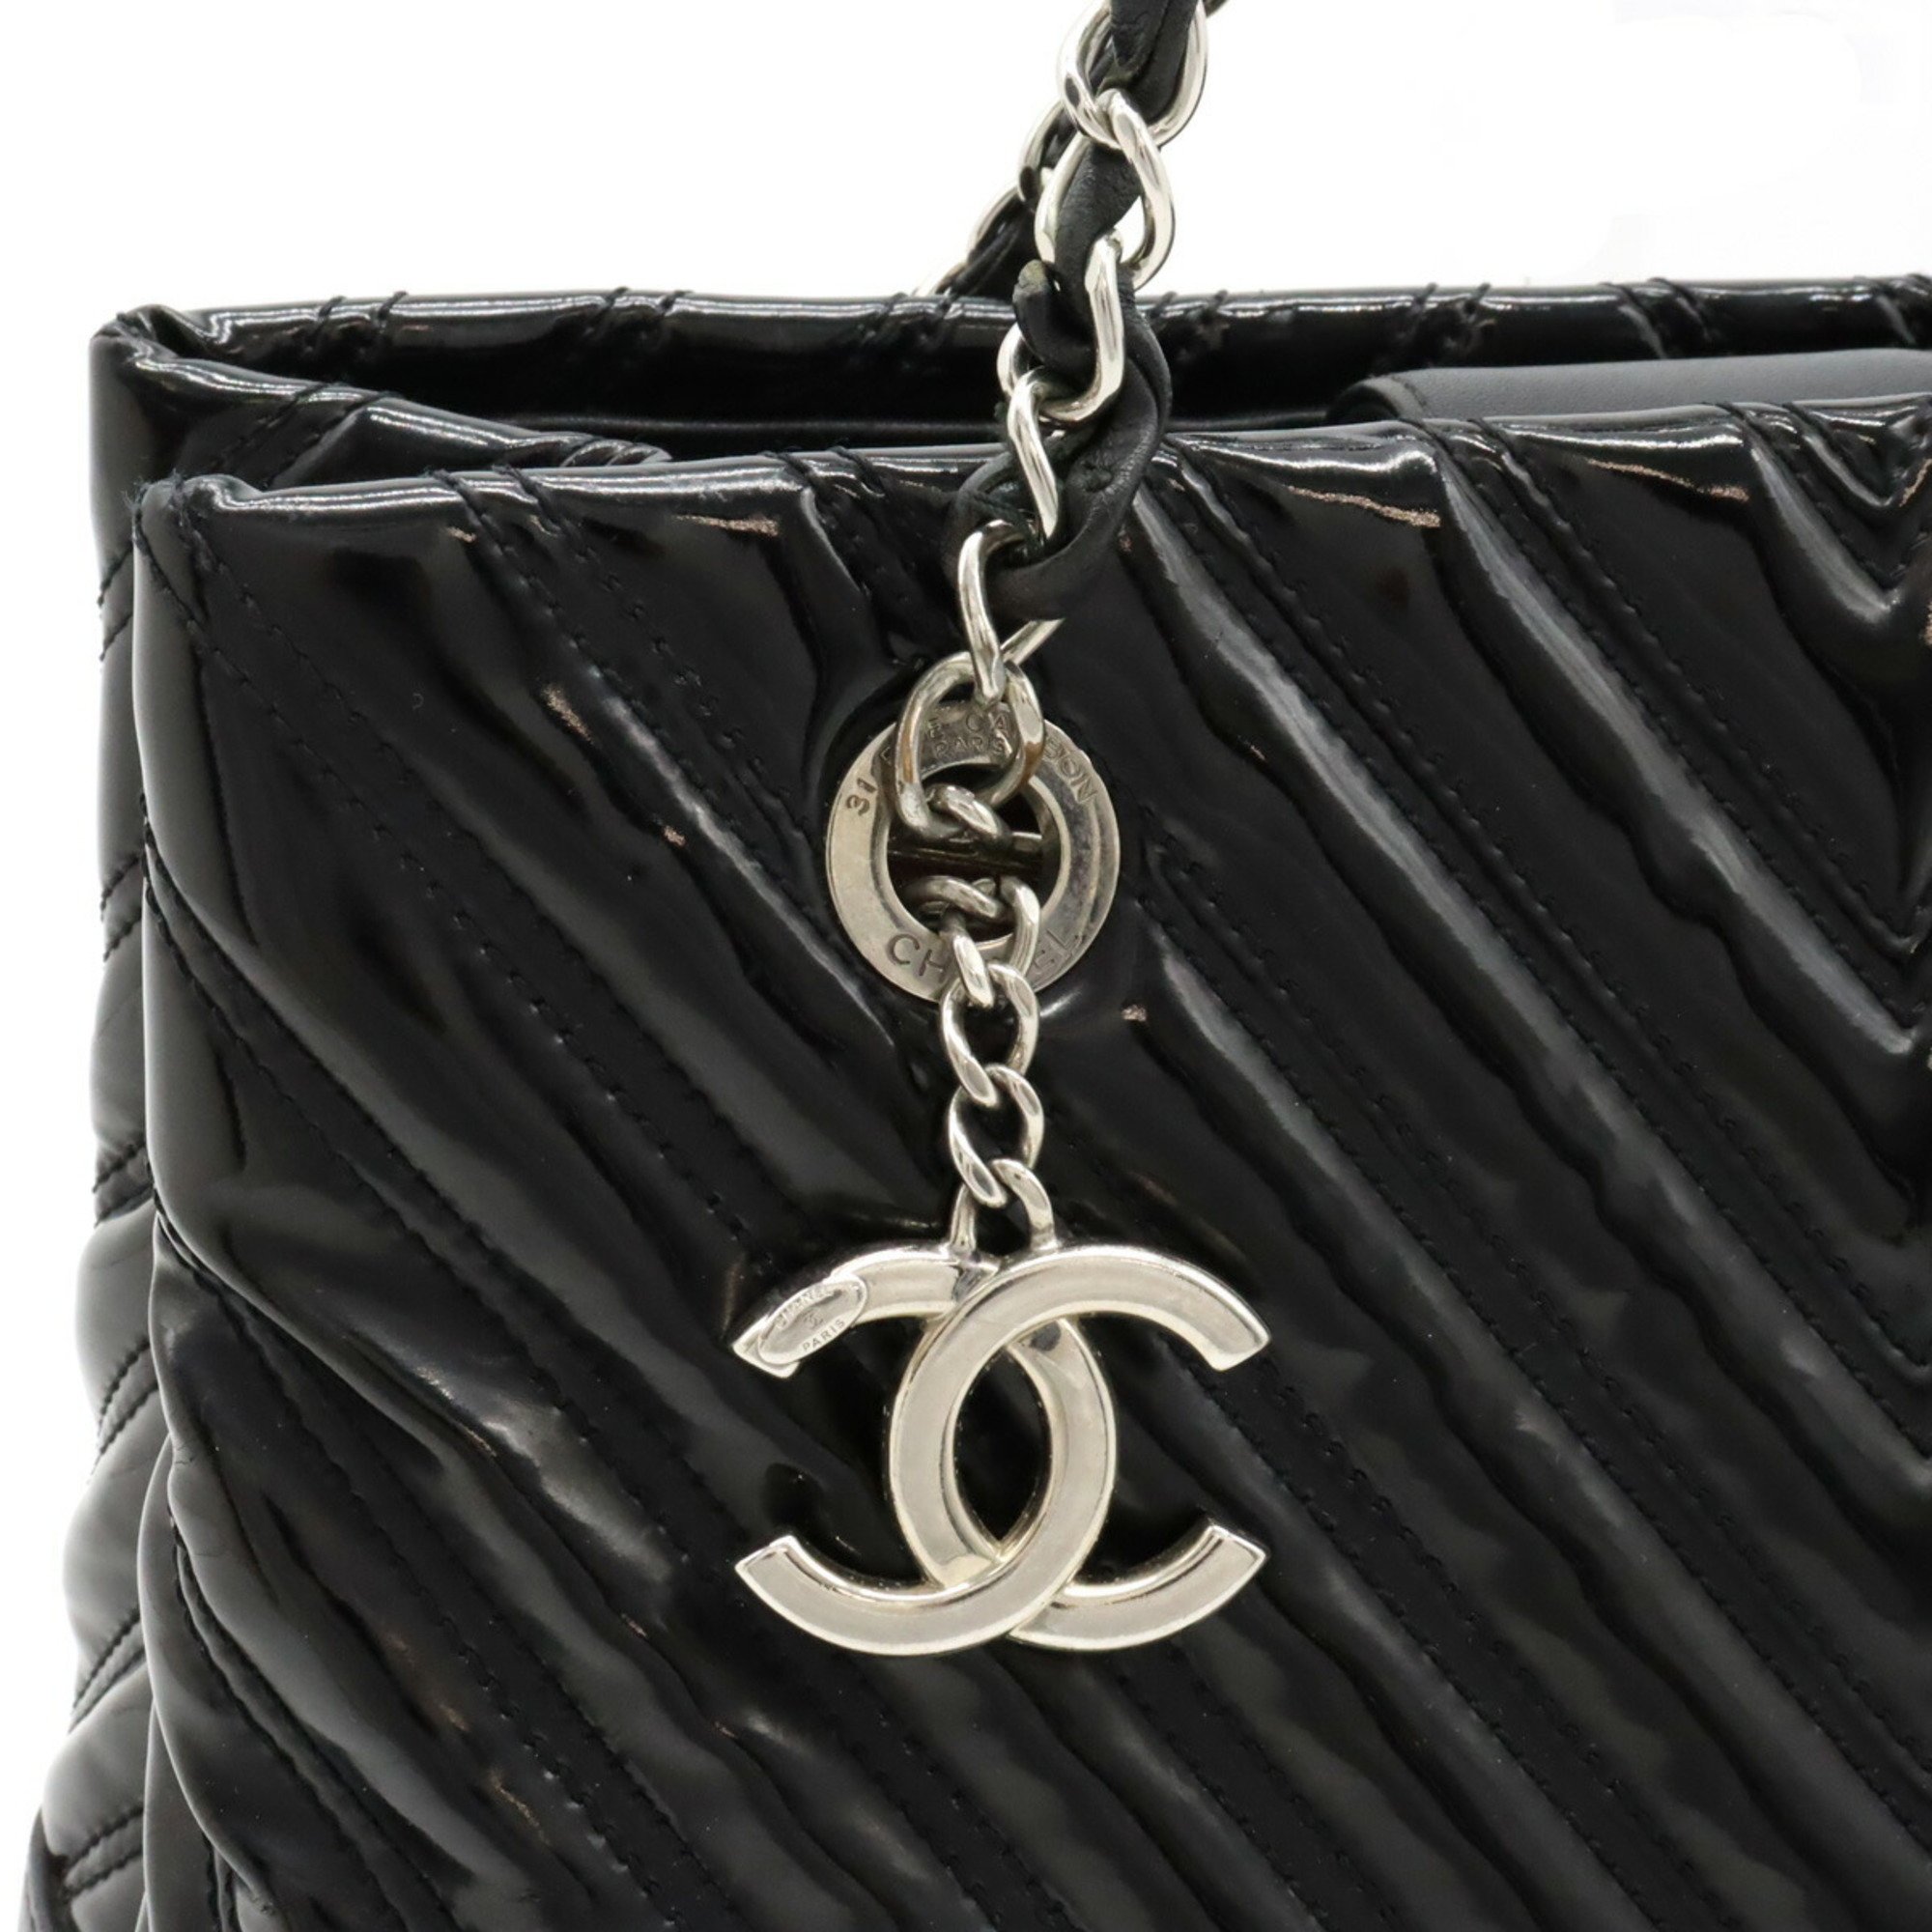 CHANEL V-stitch chevron tote bag, chain shoulder enamel leather, black A93052